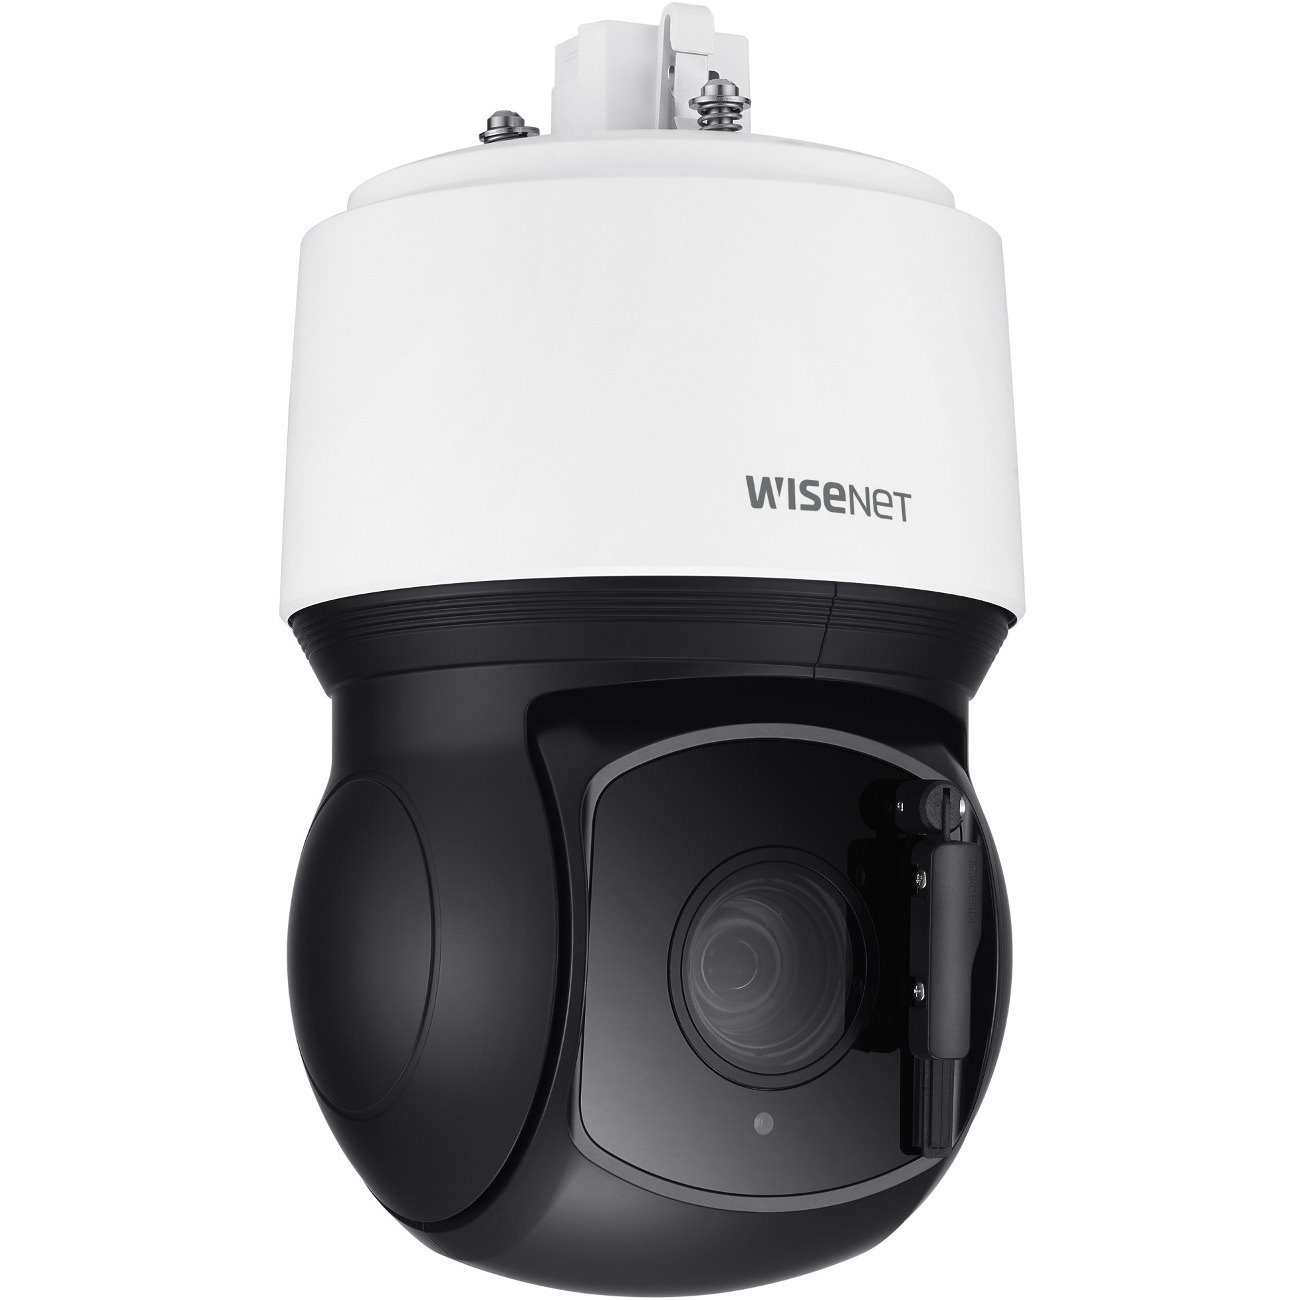 Wisenet XNP-8300RW 6 Megapixel Outdoor Network Camera - Color, Monochrome - Dome - White, Black